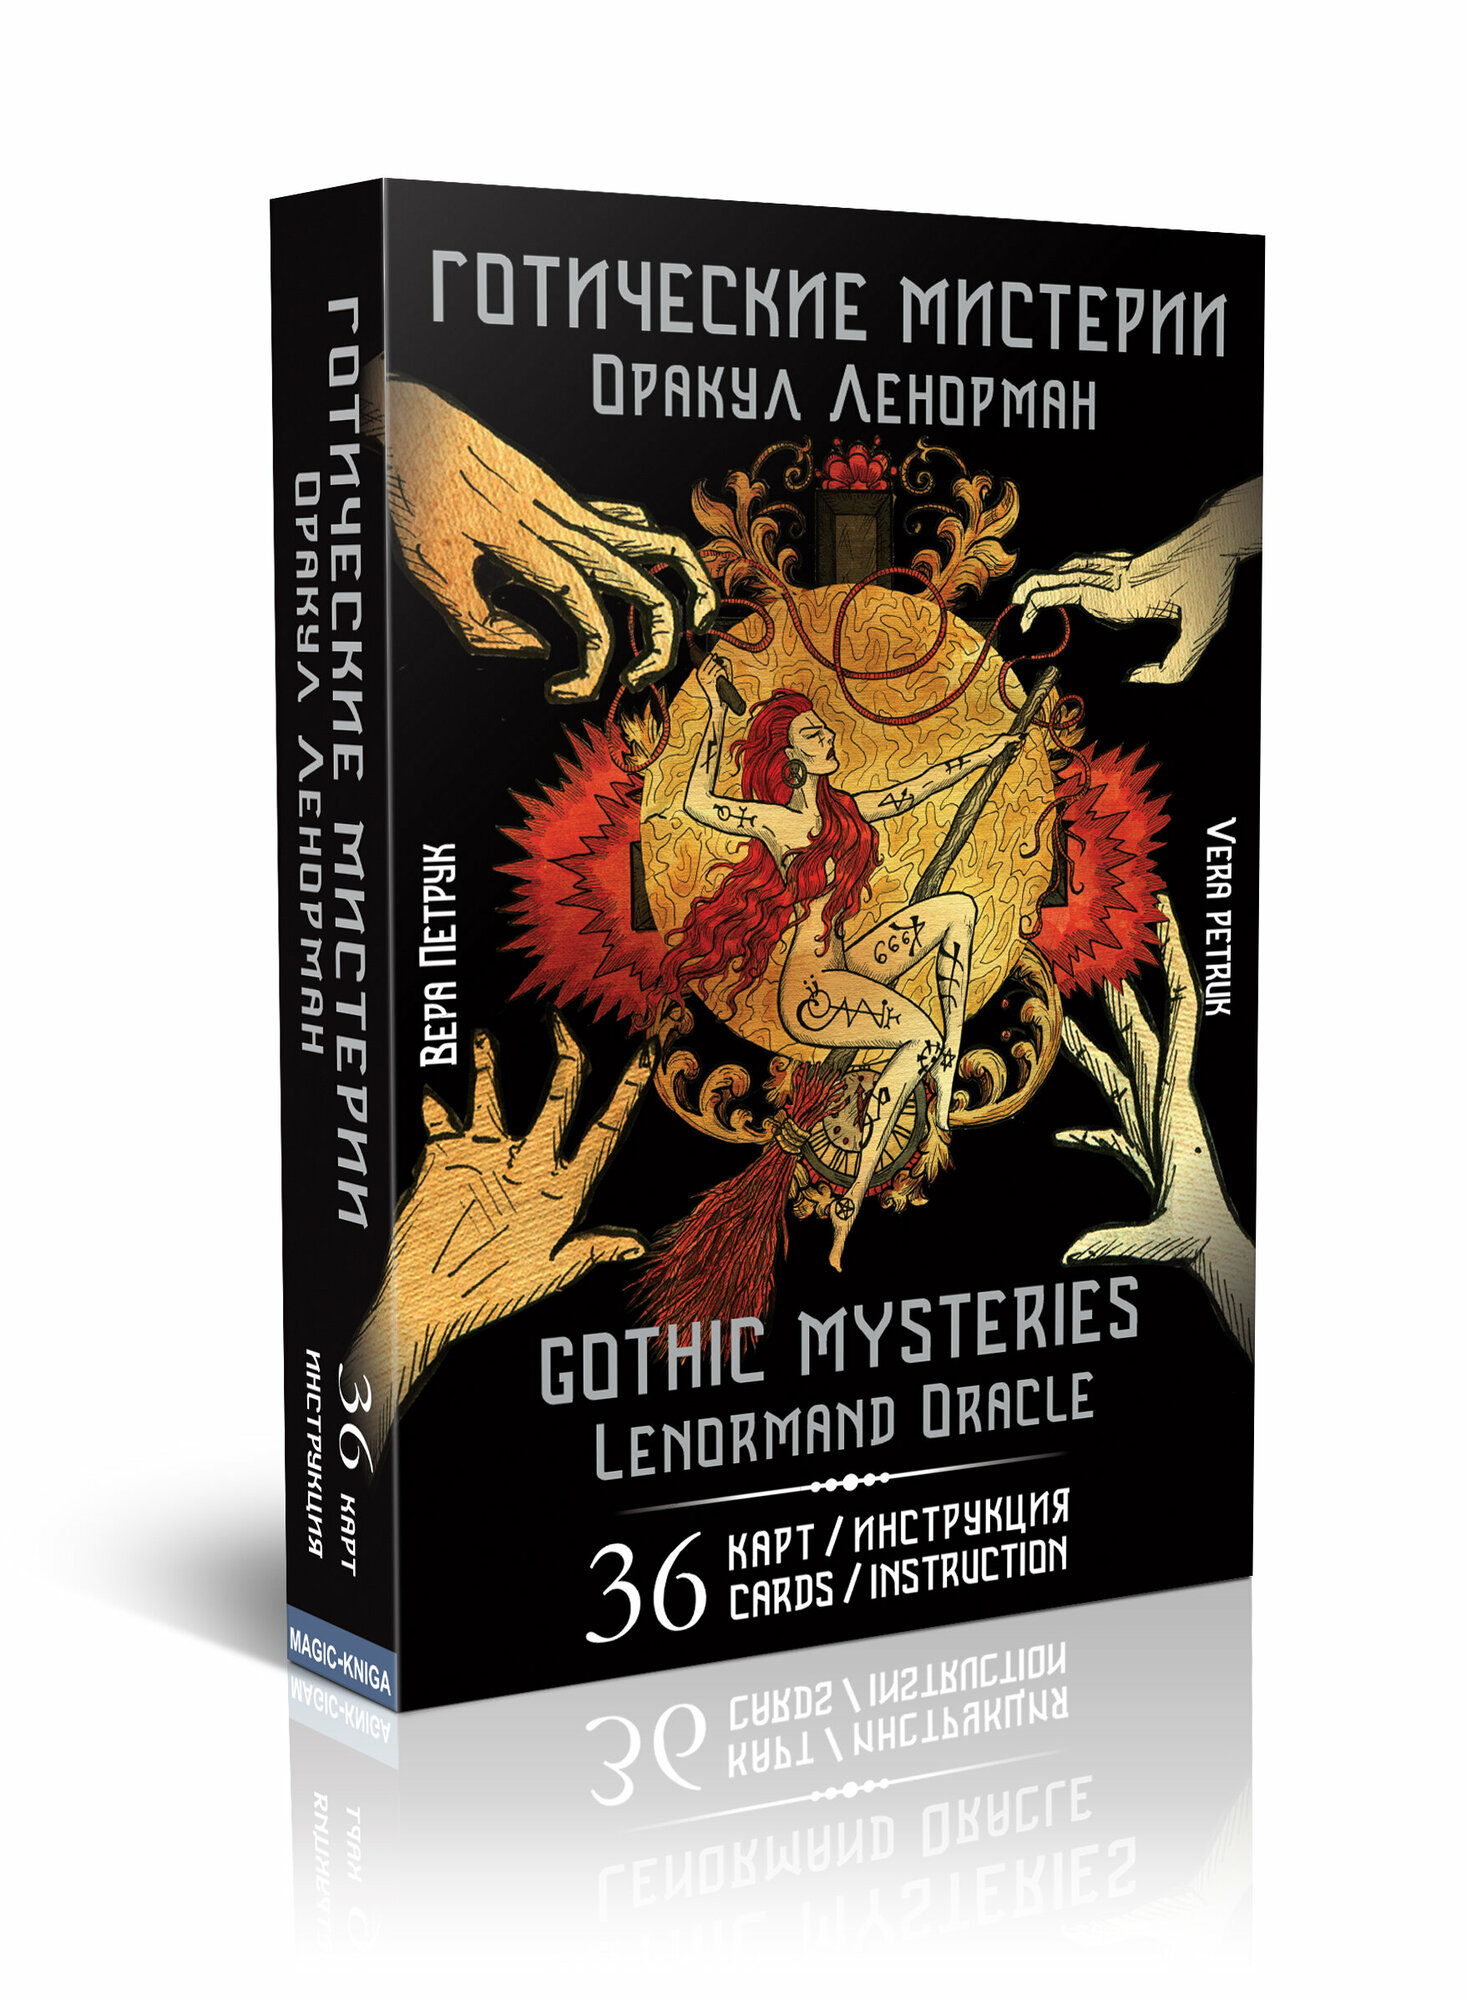 Оракул Ленорман «Готические мистерии». Gothic Mysteries Lenormand Oracle - фото №1